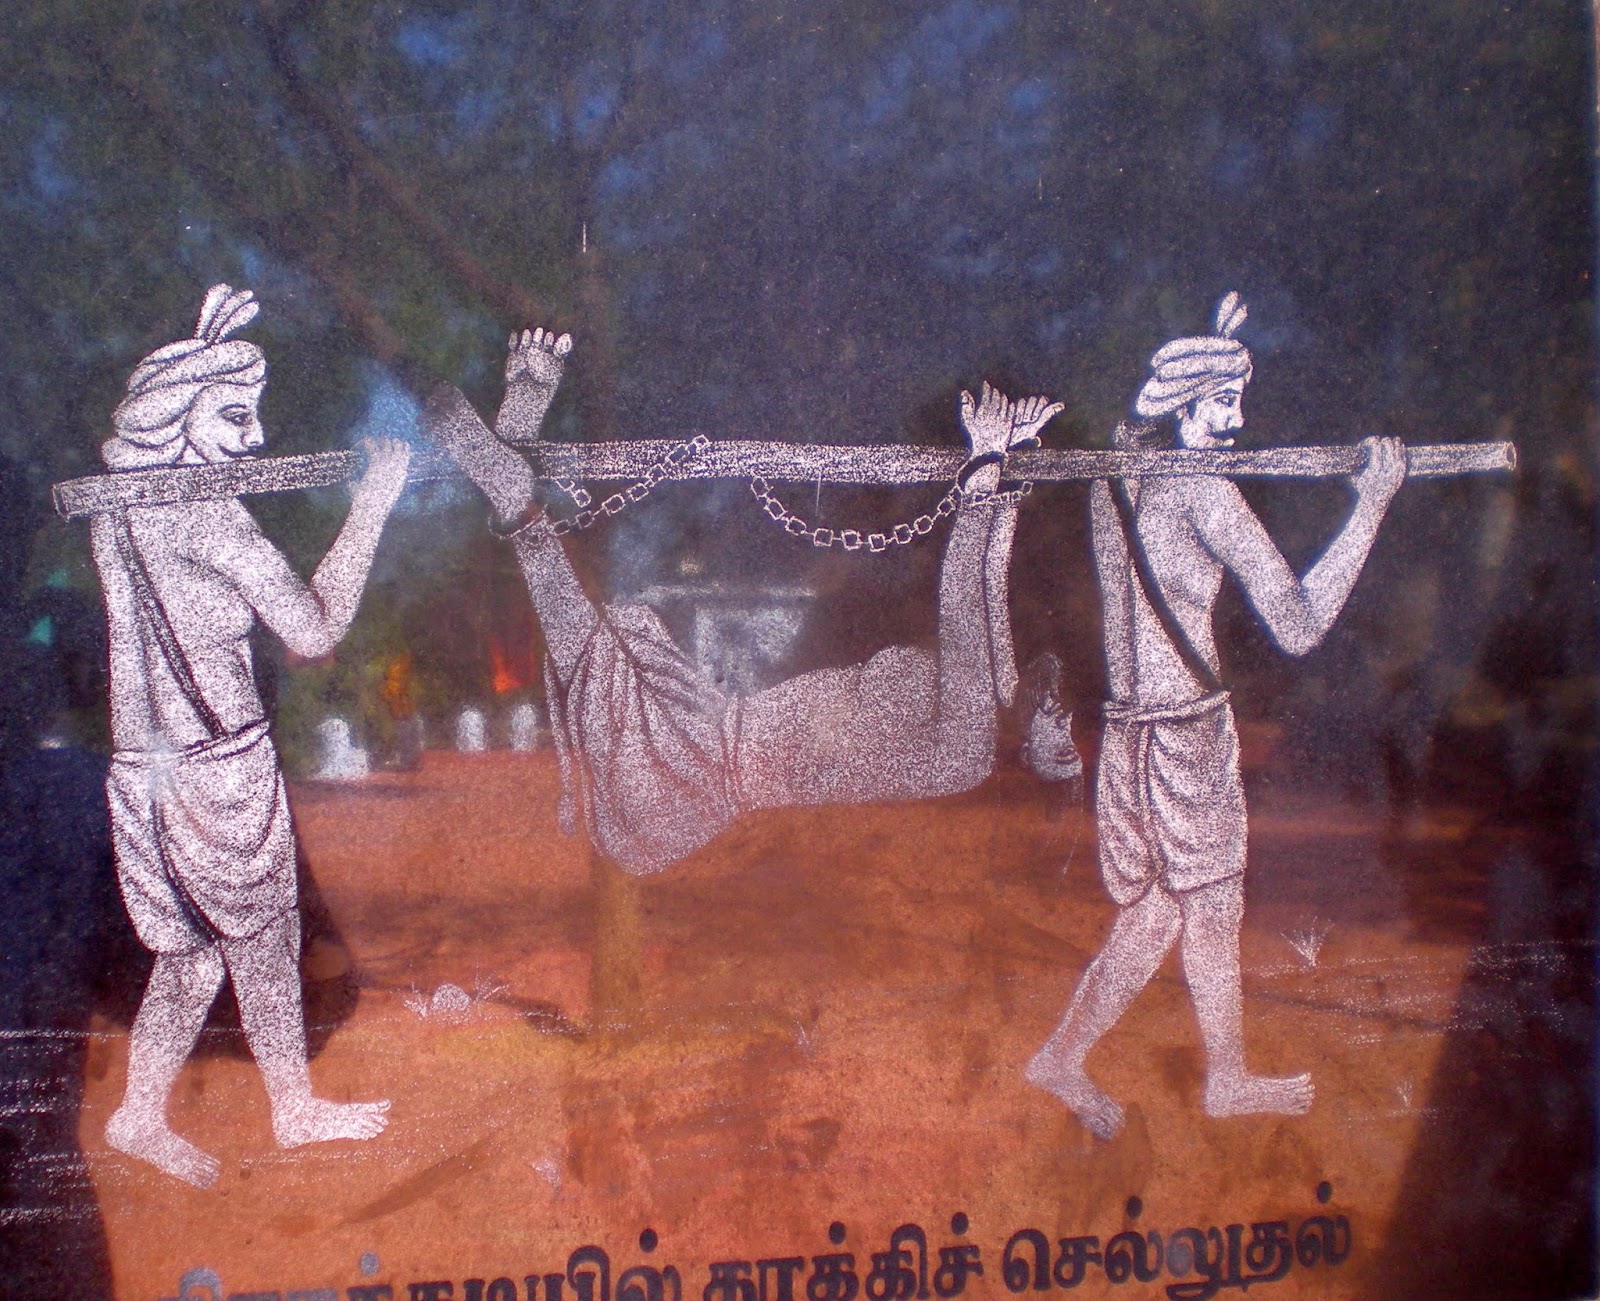 Devasahayam, being carried him like a hanging animal to Kattadi Malai